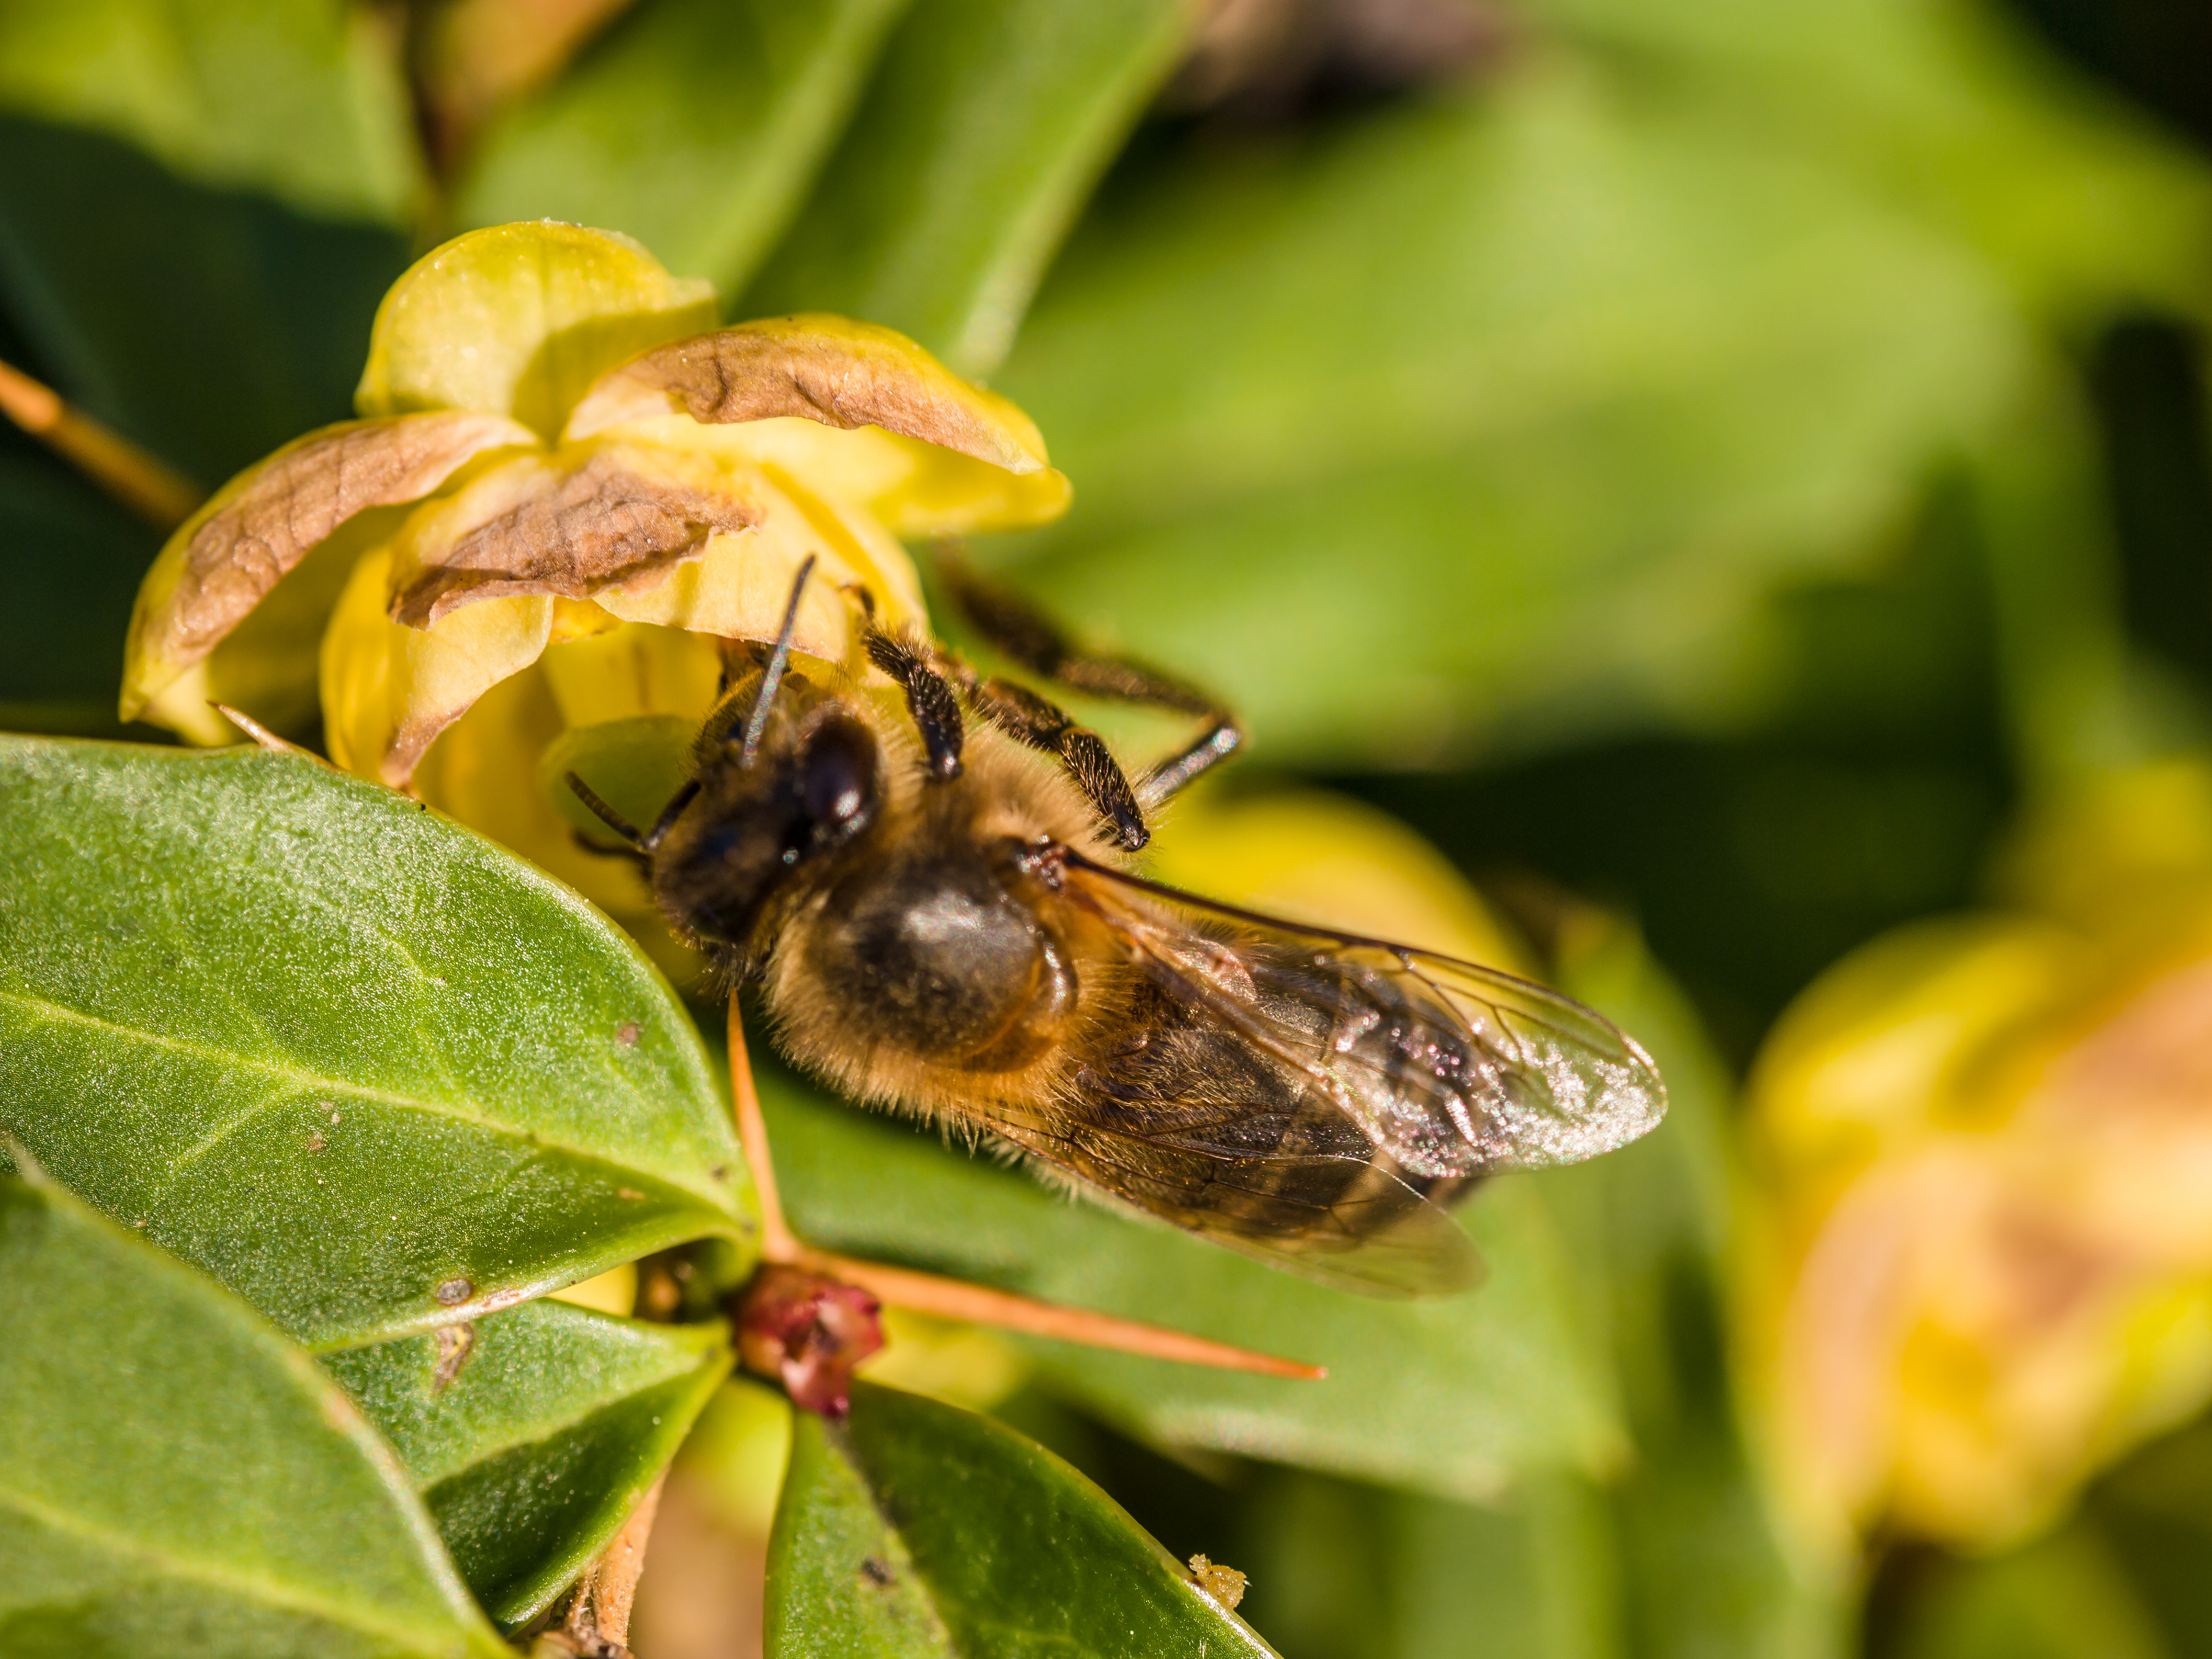 File:Bee on leaf (9058123314).jpg - Wikimedia Commons